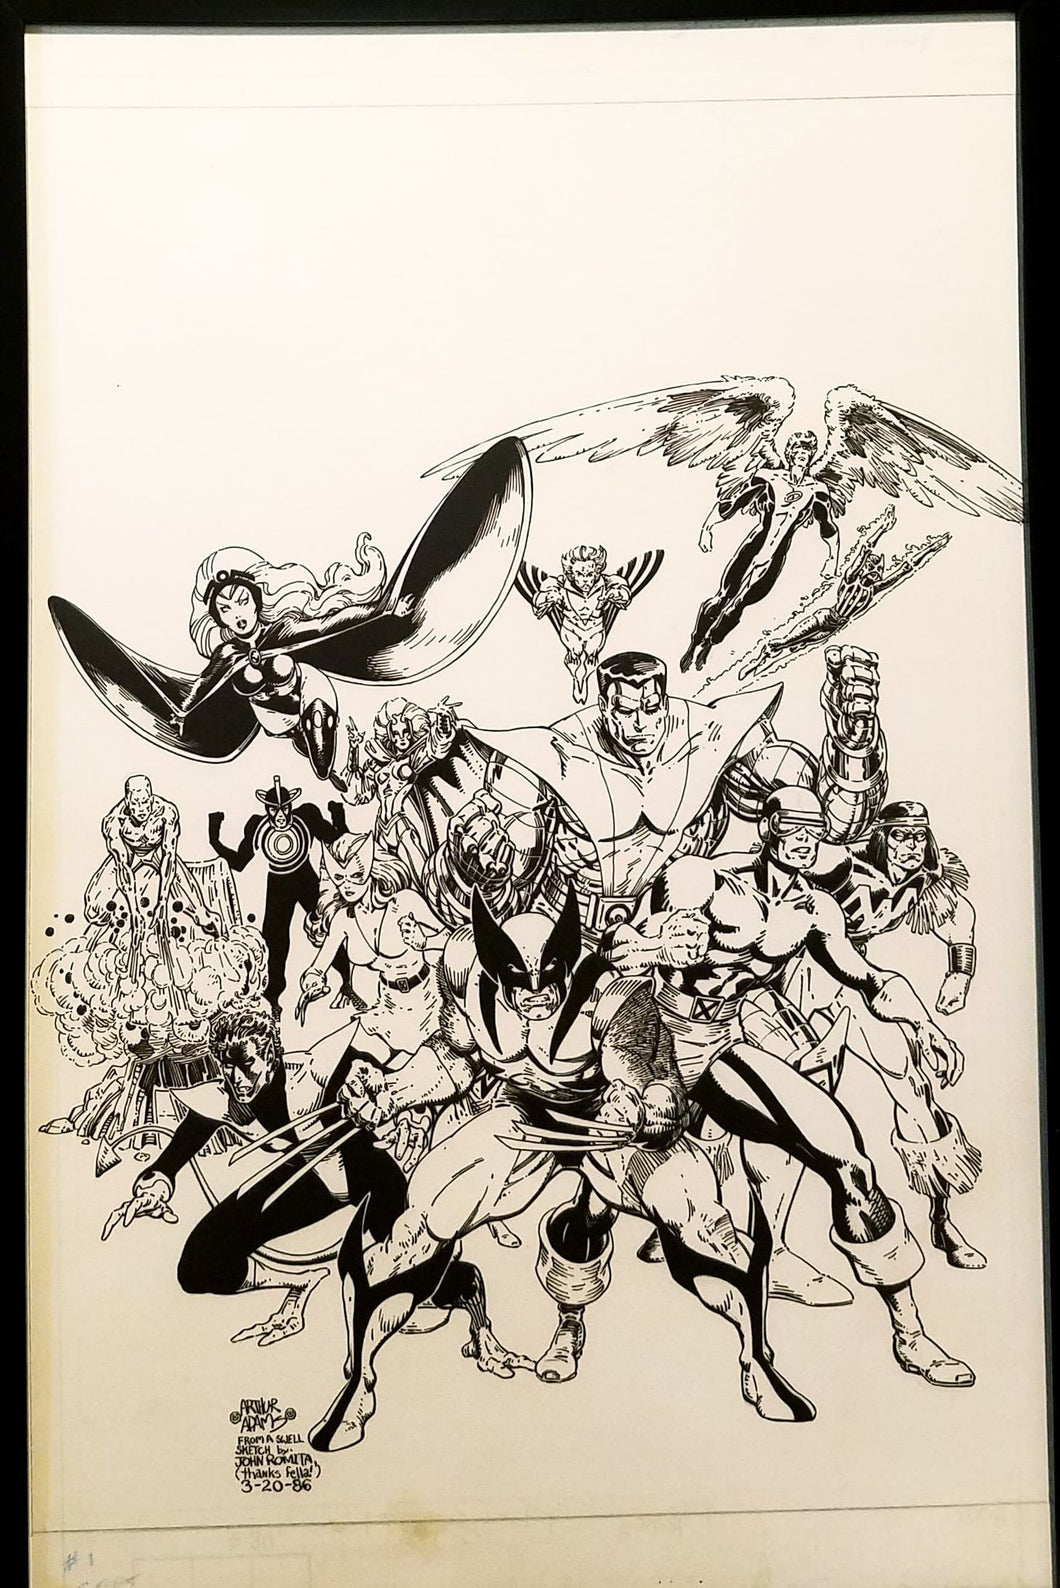 Classic X-Men #1 by Art Adams 11x17 FRAMED Original Art Poster Marvel Comics